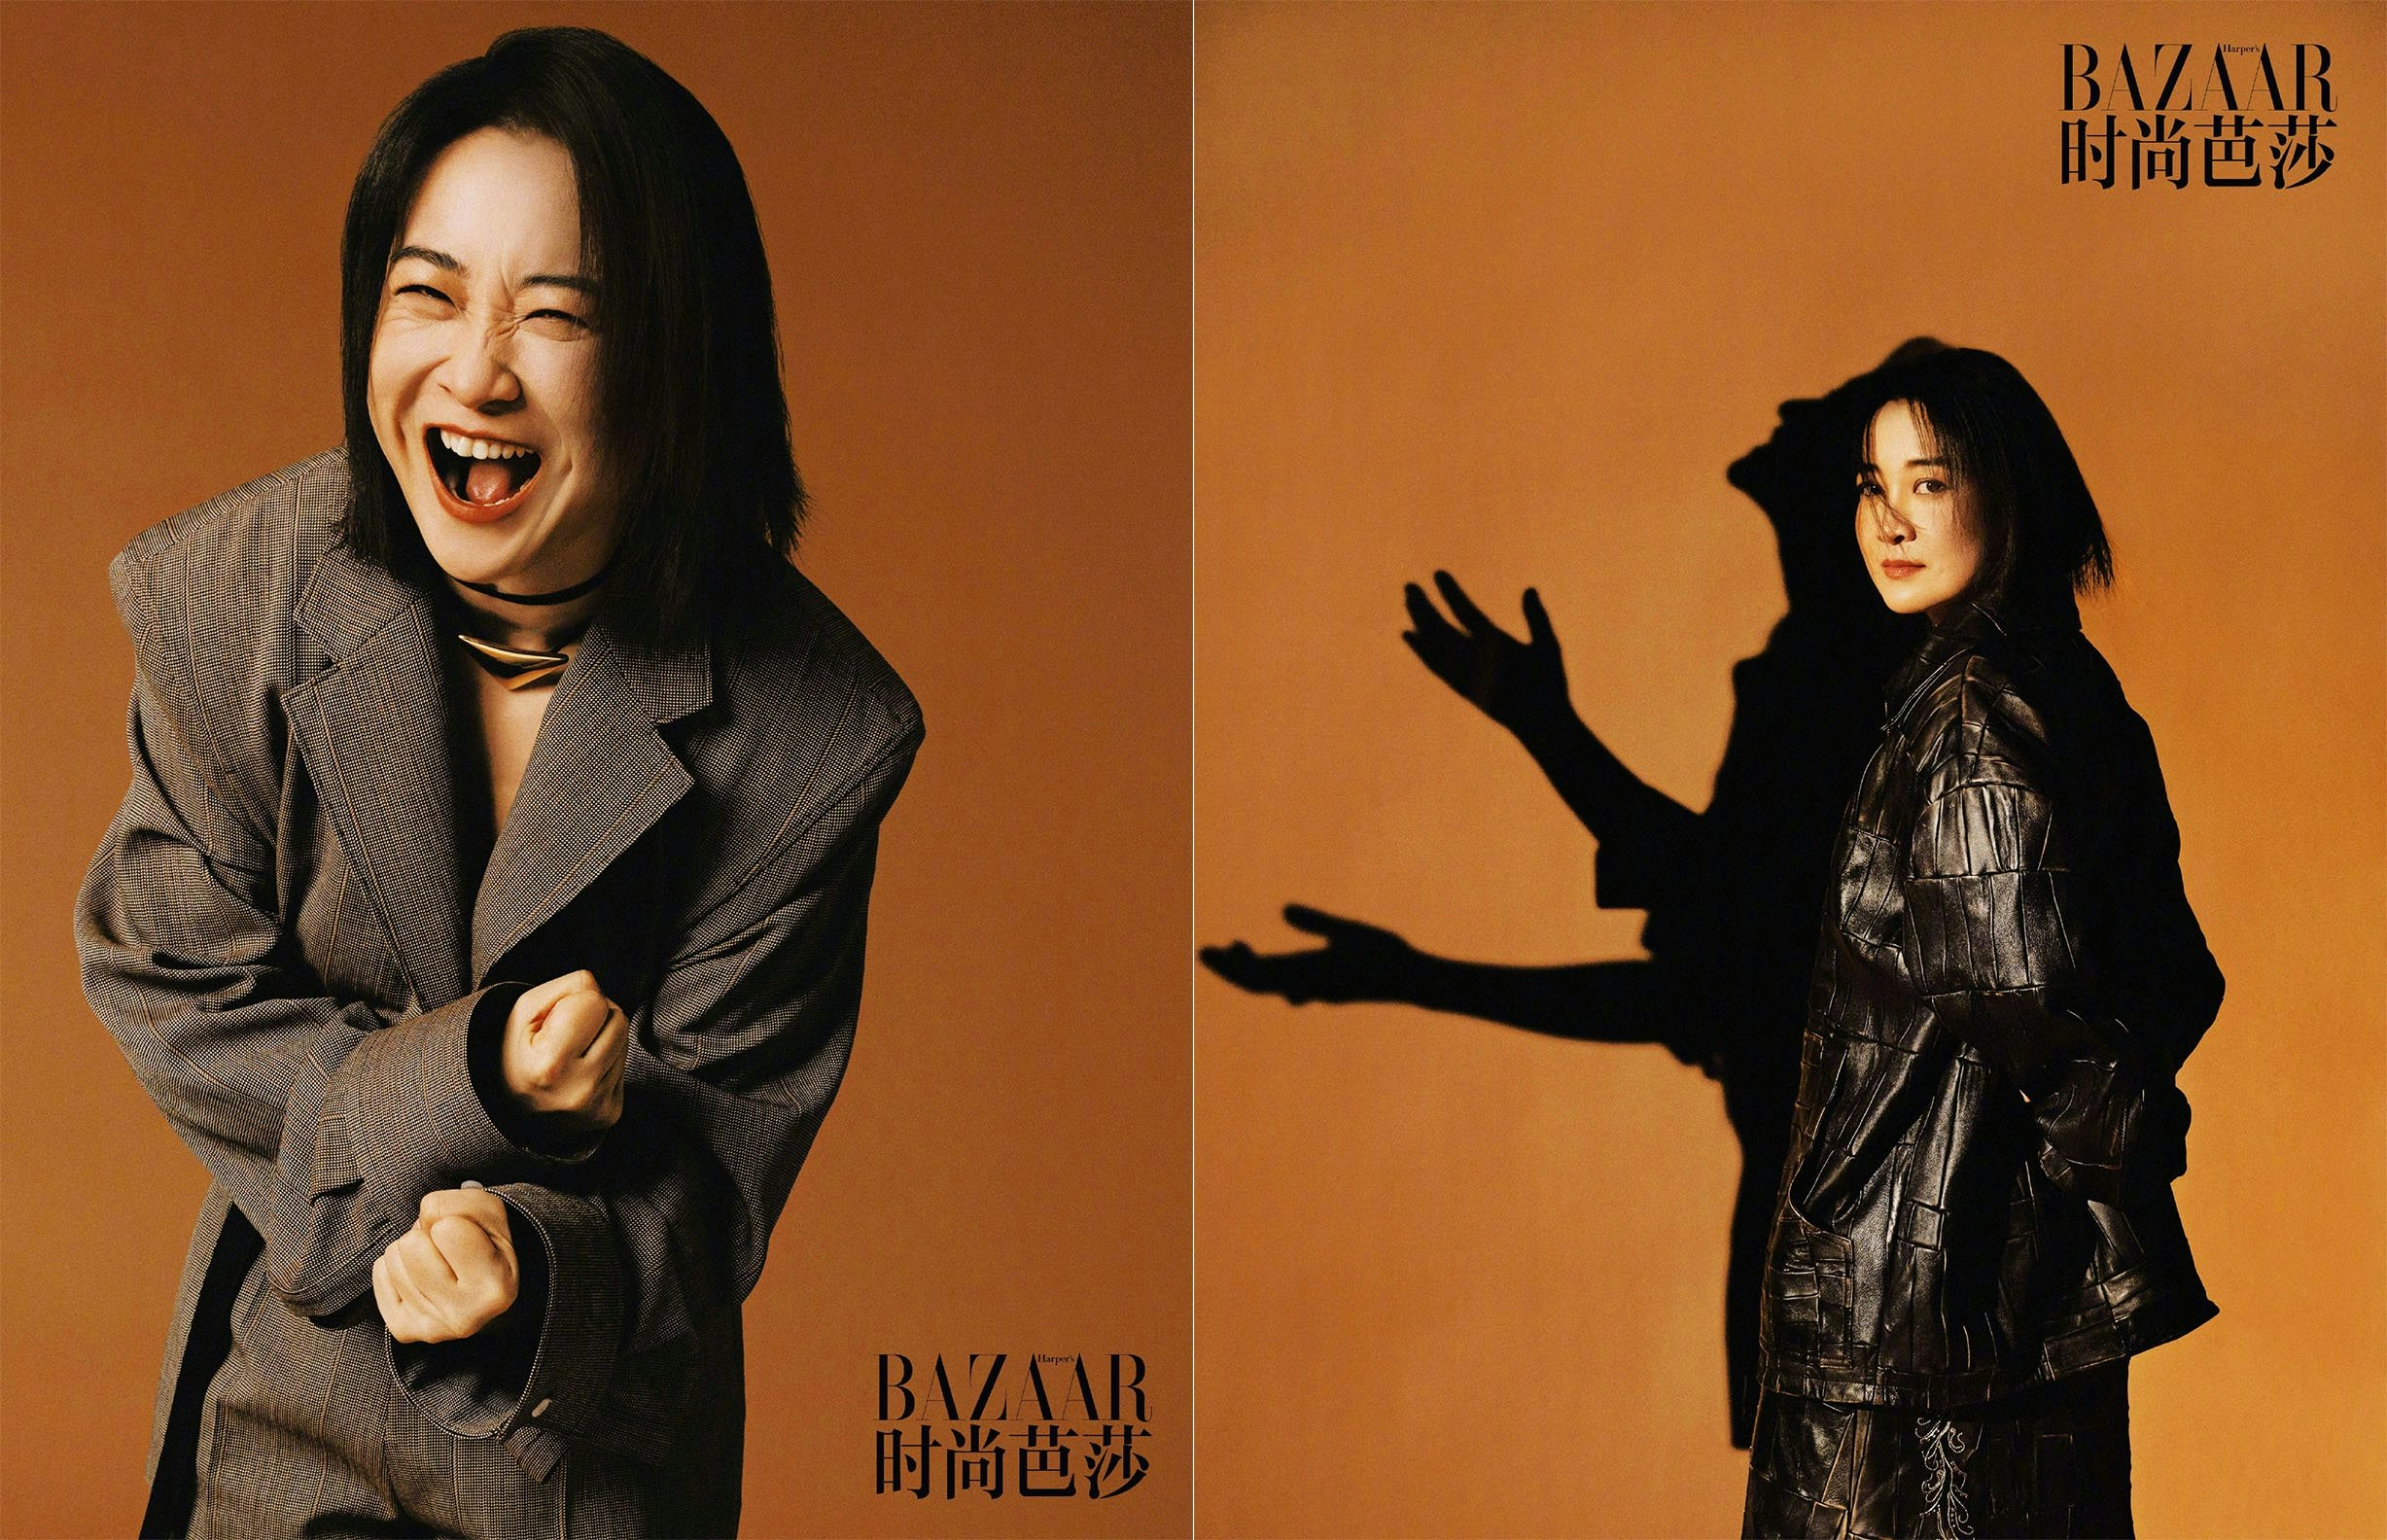 Prada dressed Jia Ling for her 'Harper’s Bazaar' cover shoot. Photo: Harper’s Bazaar Weibo